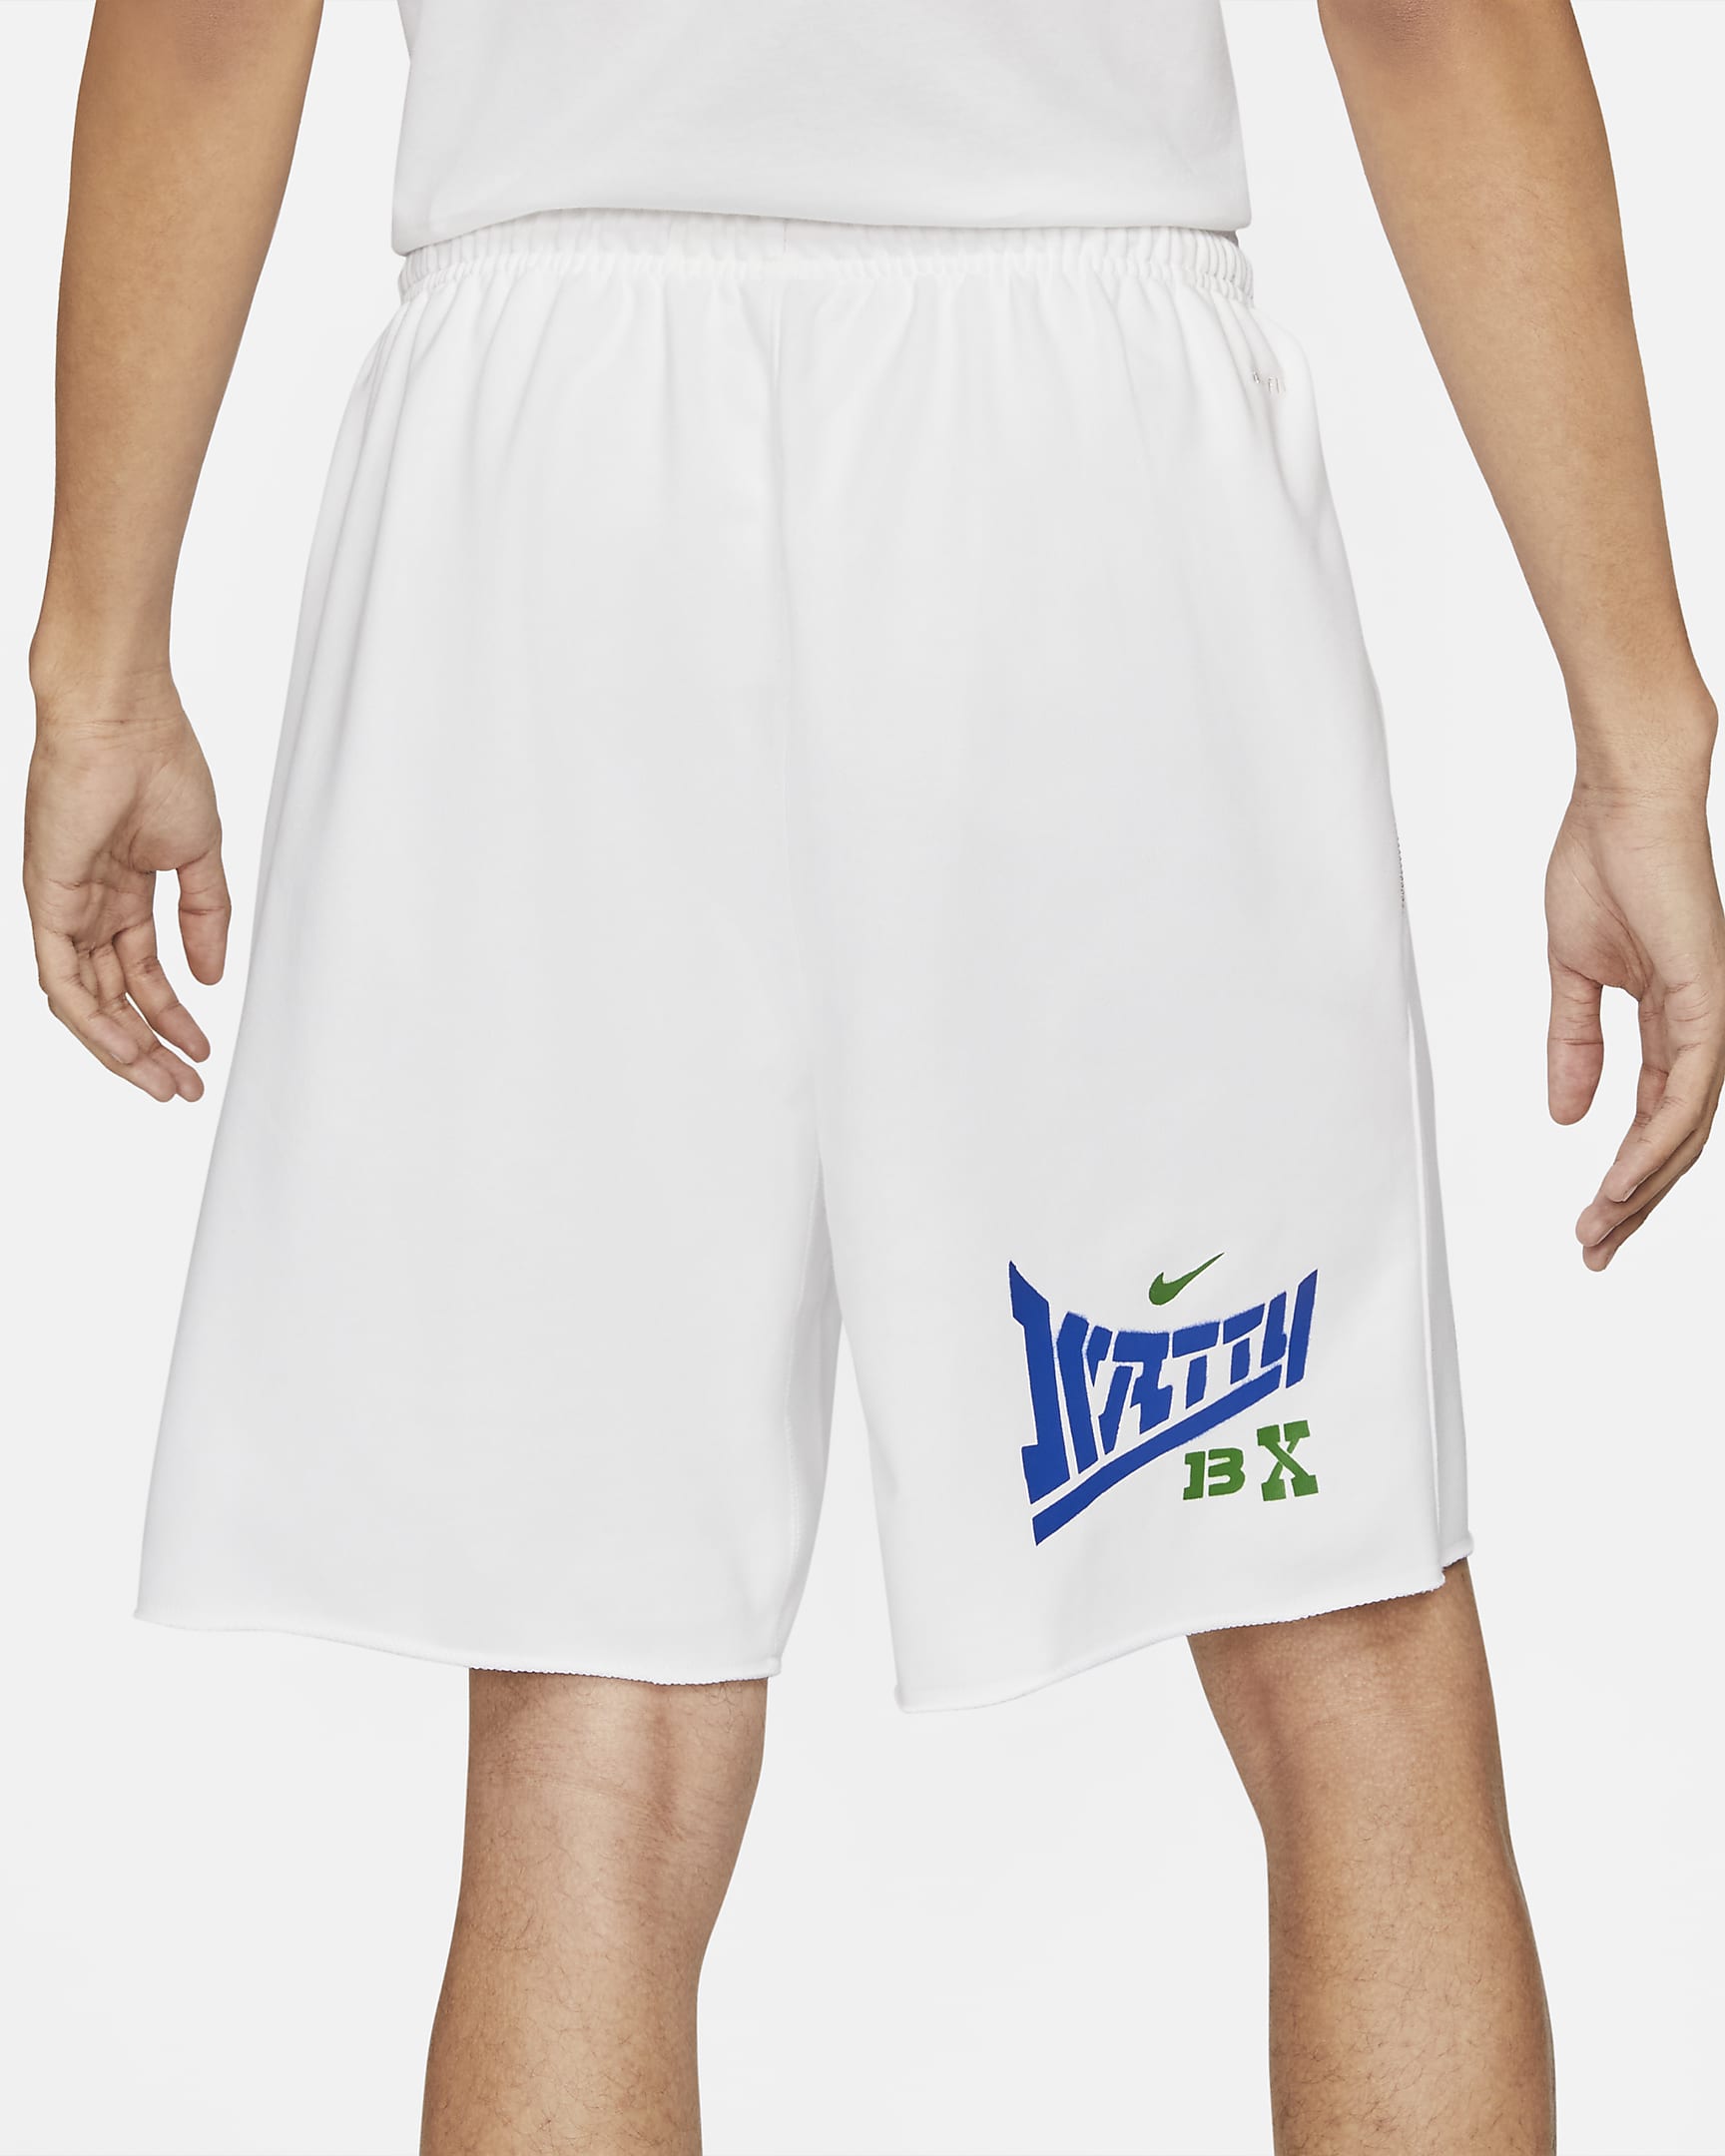 standard-issue-watson-mens-basketball-fleece-shorts-6C2R8v-1.png